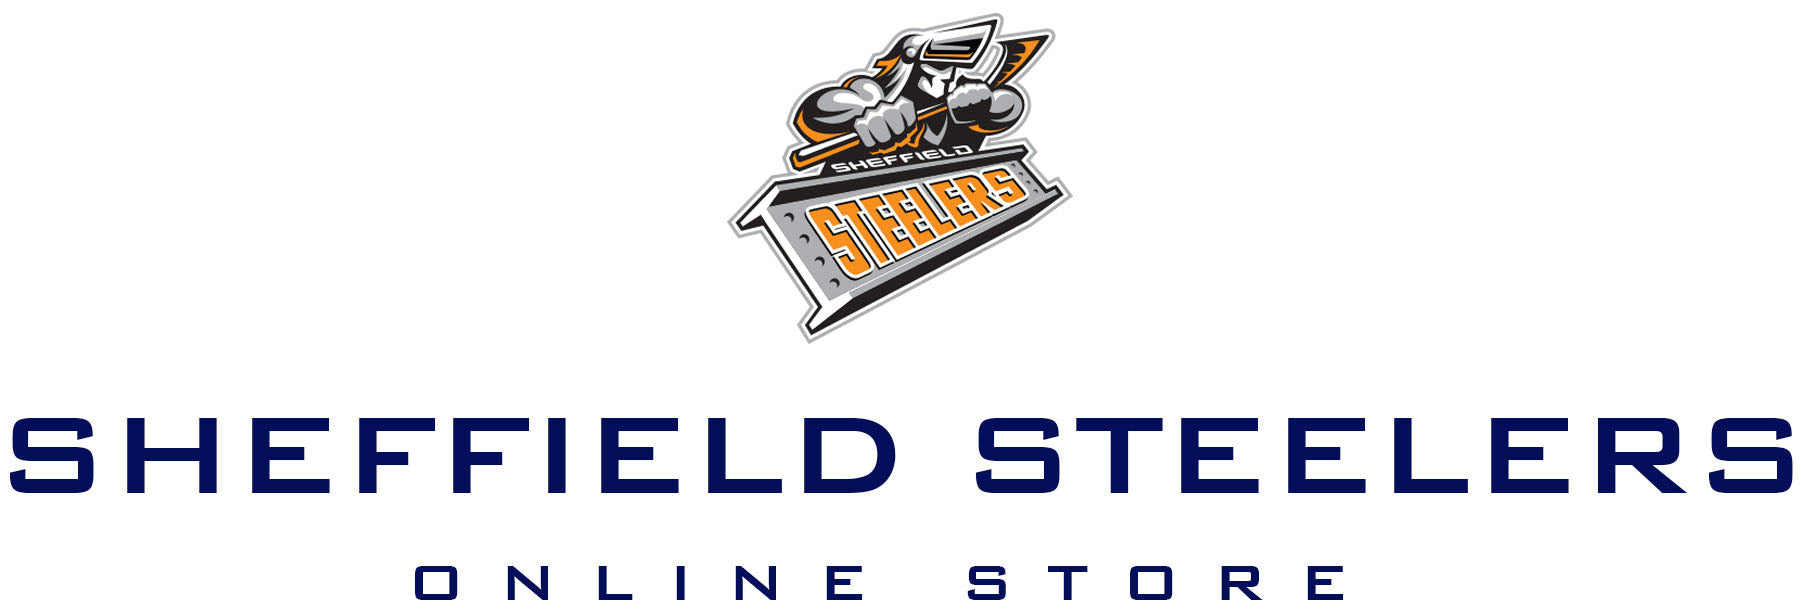 steelers shop uk